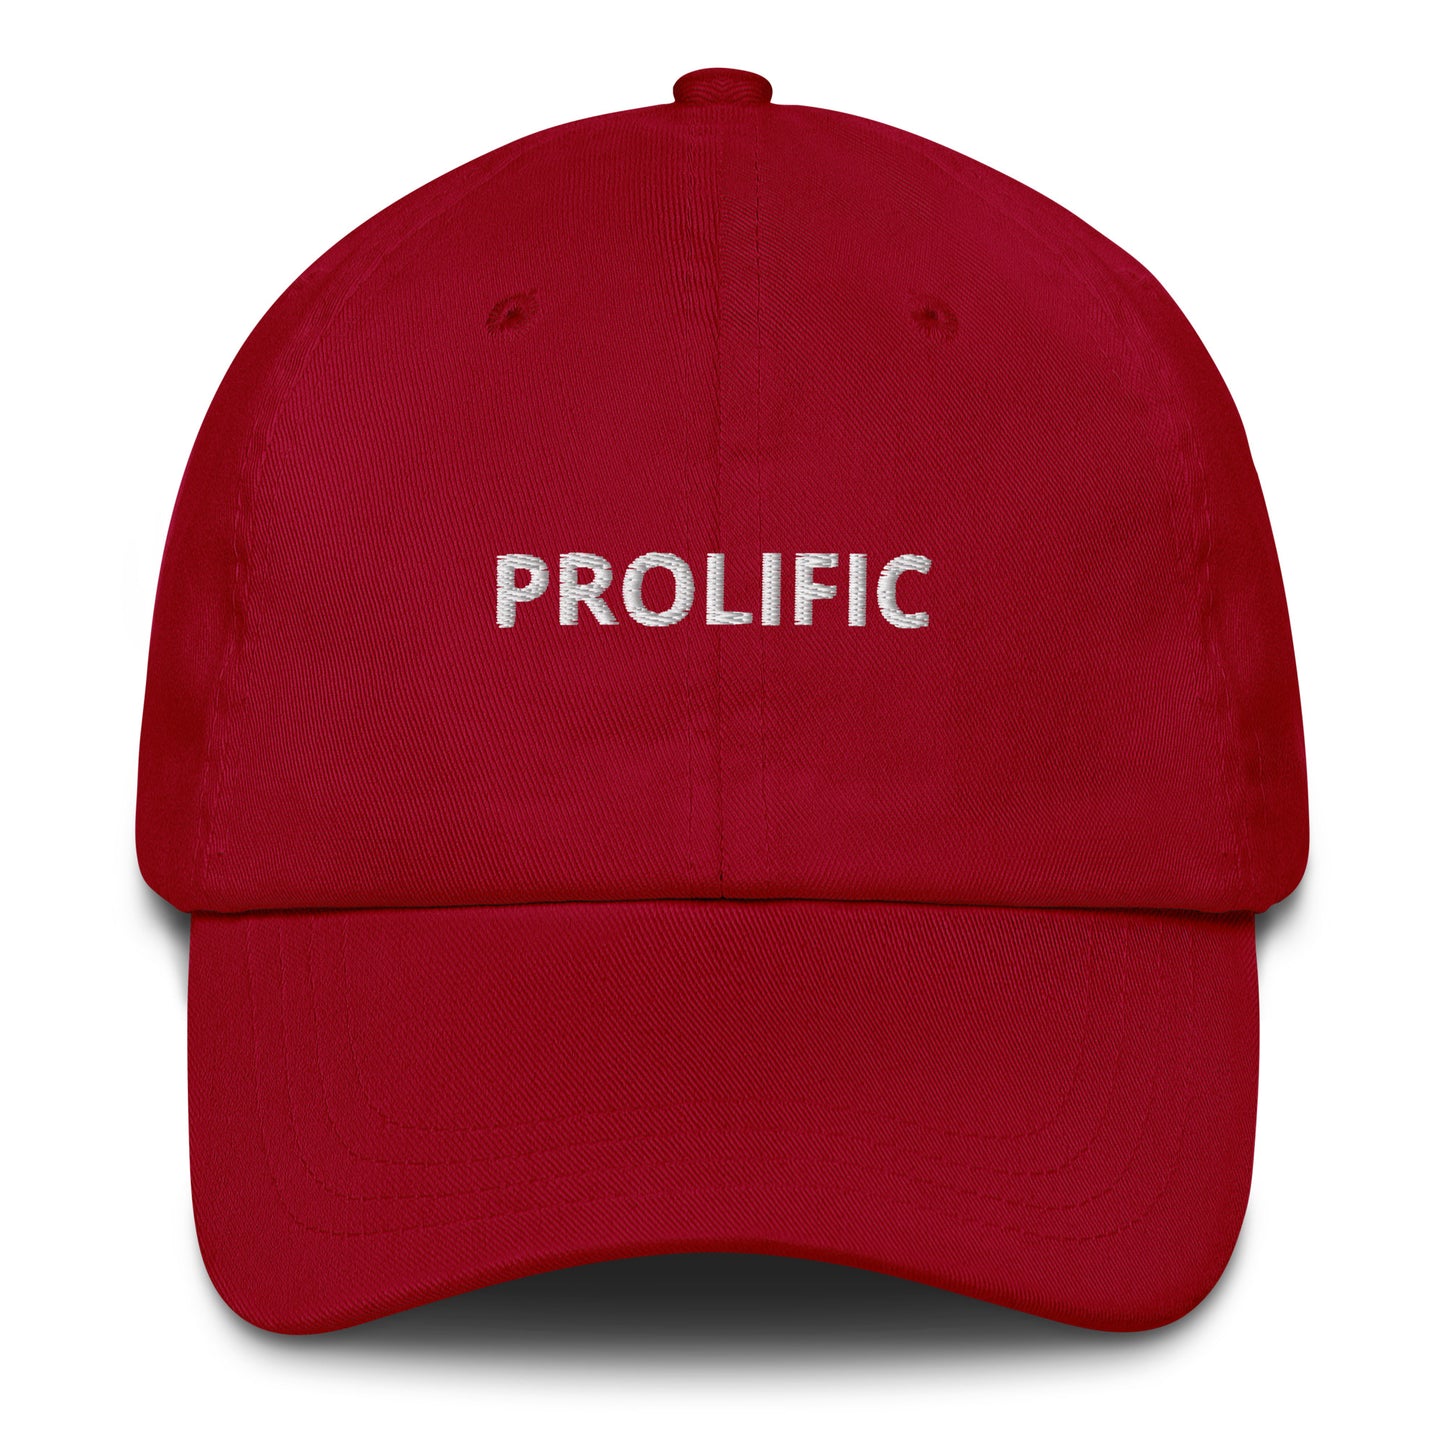 PROLIFIC hat